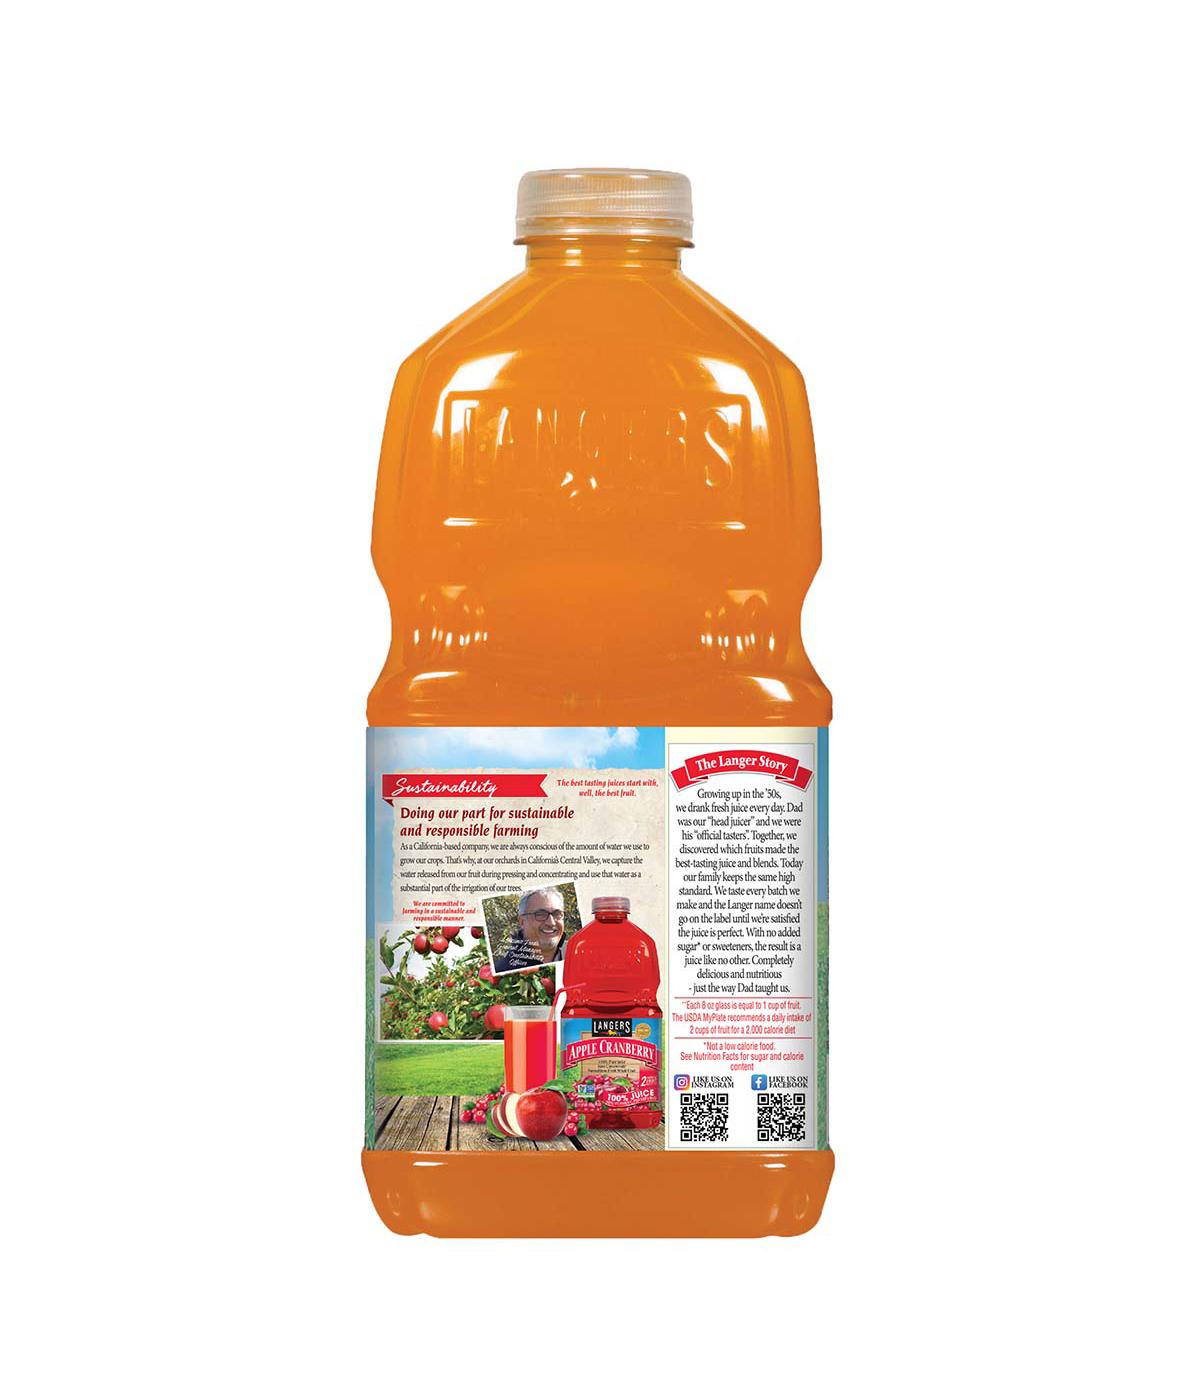 Langers Pure Juice - Apple Peach Mango; image 2 of 2